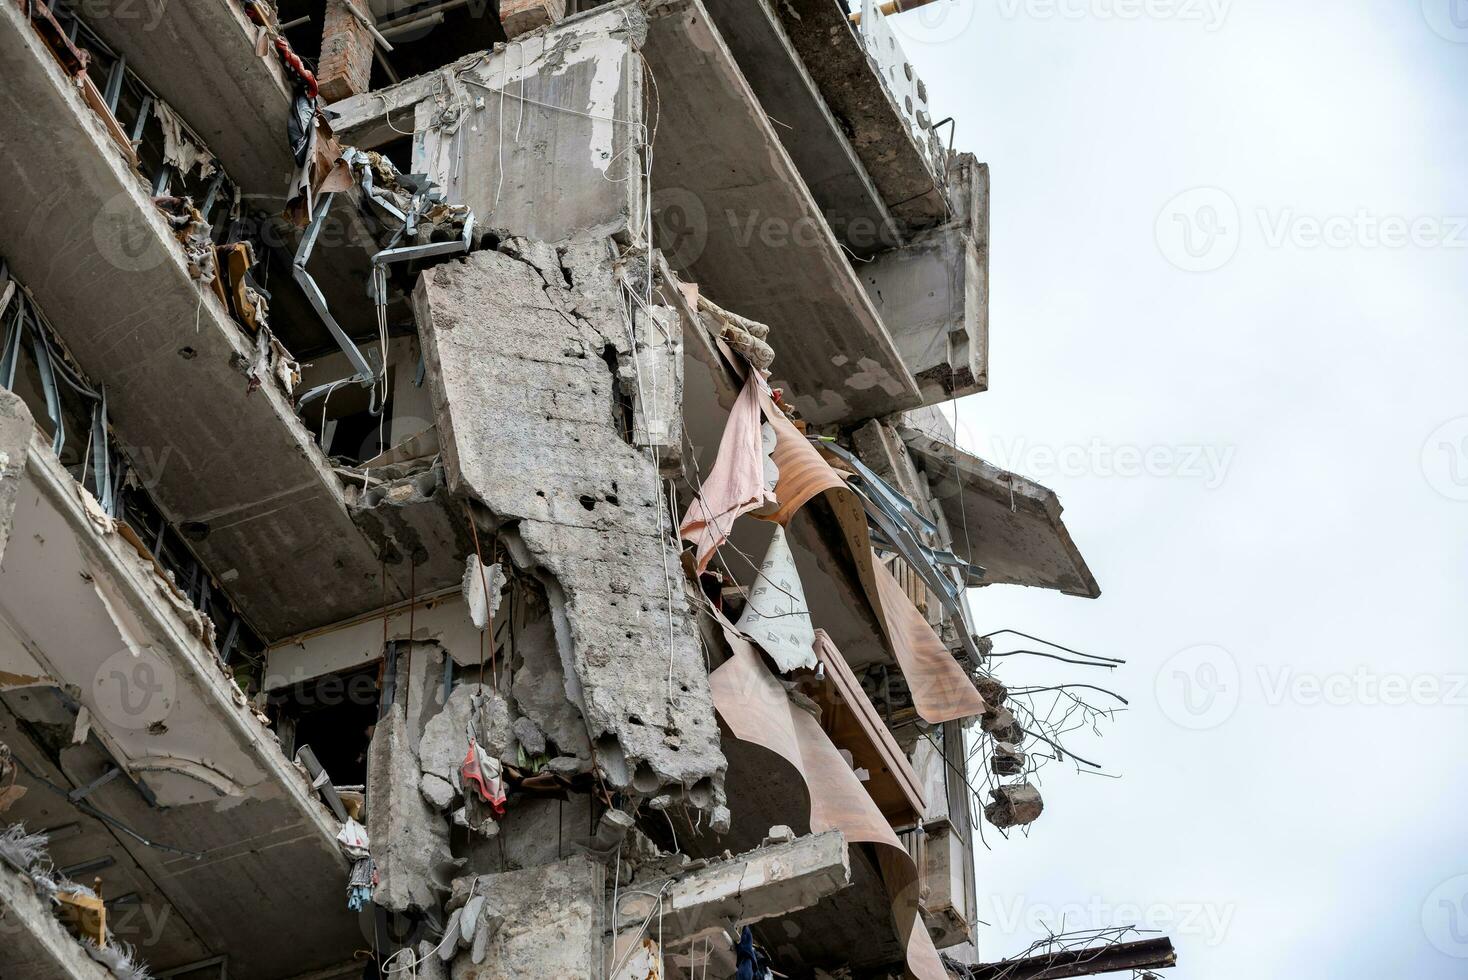 destruído e queimado casas dentro a cidade durante a guerra dentro Ucrânia foto